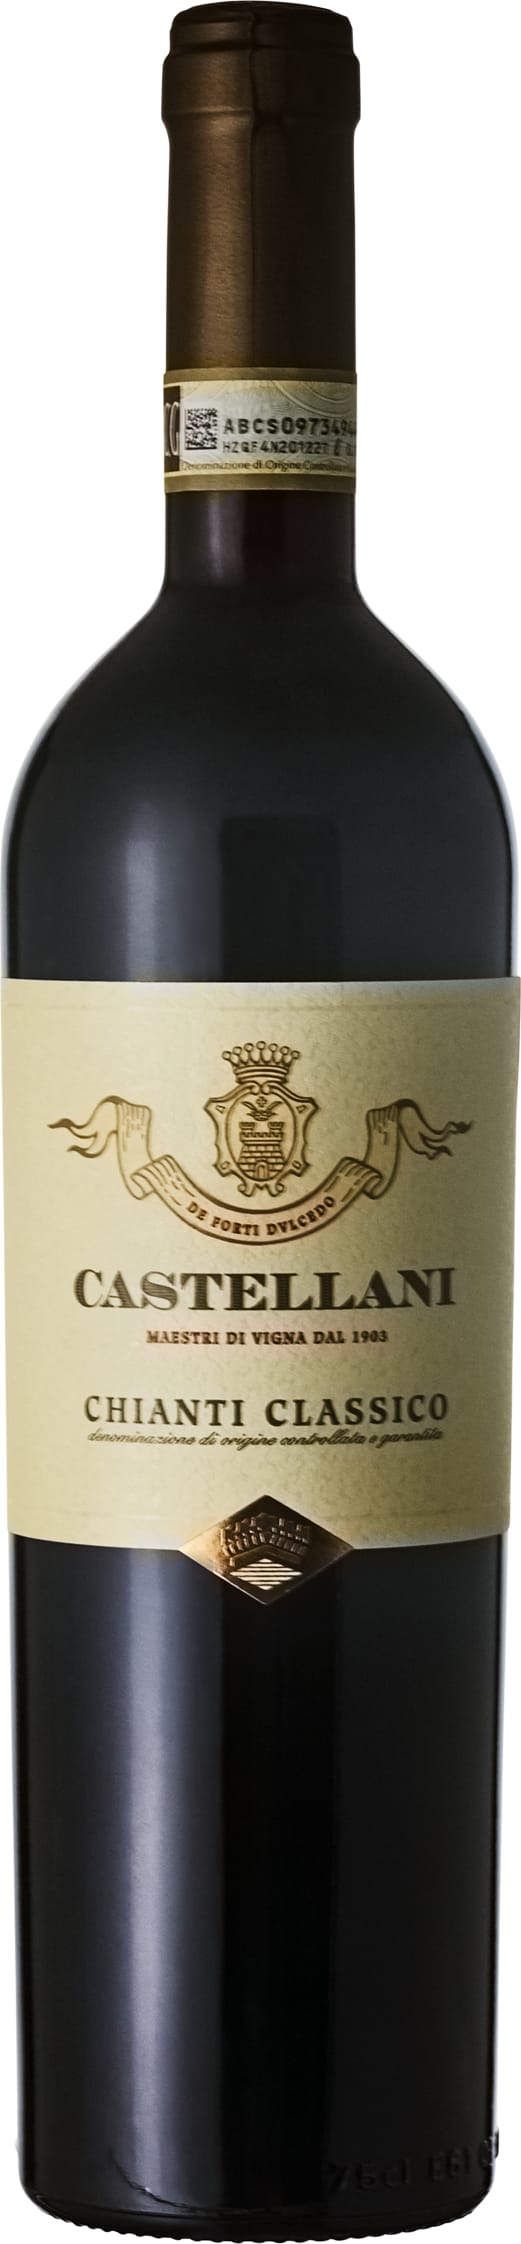 Castellani Chianti Classico DOCG 2020 75cl - Buy Castellani Wines from GREAT WINES DIRECT wine shop